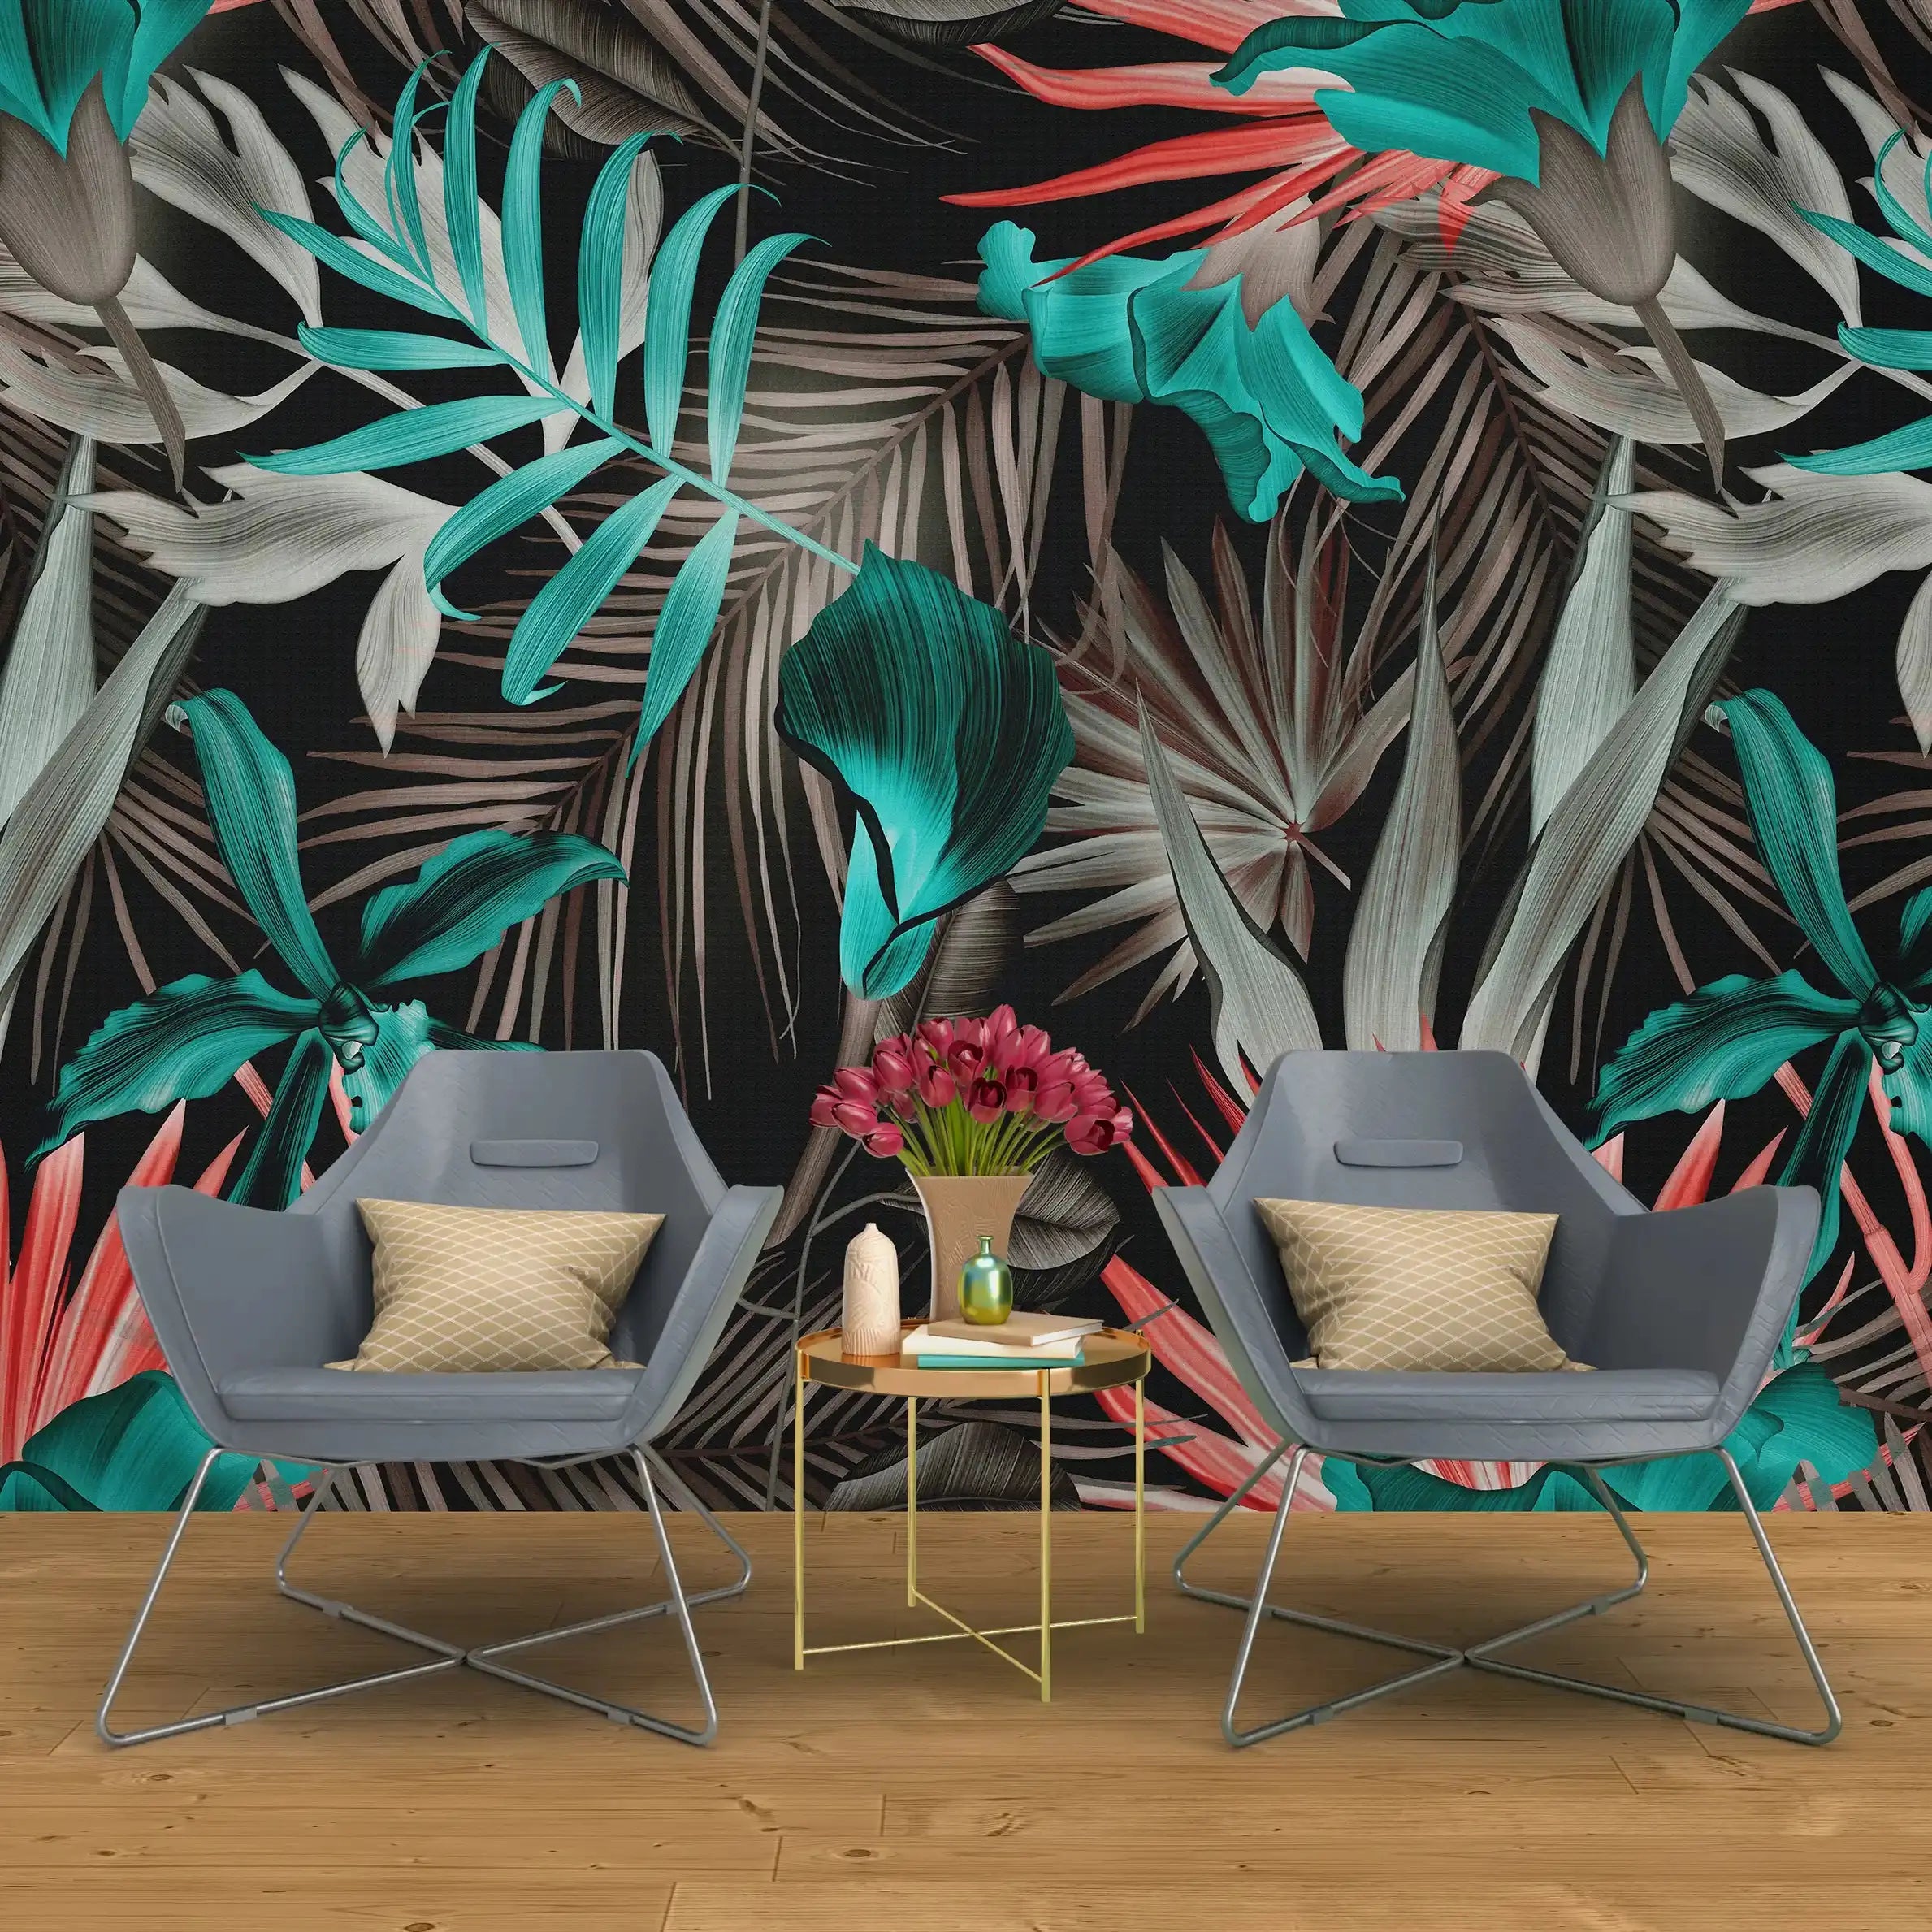 3073-B / Self-Adhesive Wall Mural, Exotic Brown & Green Leaves, Watercolor Botanical Wallpaper for Modern Home Decor - Artevella